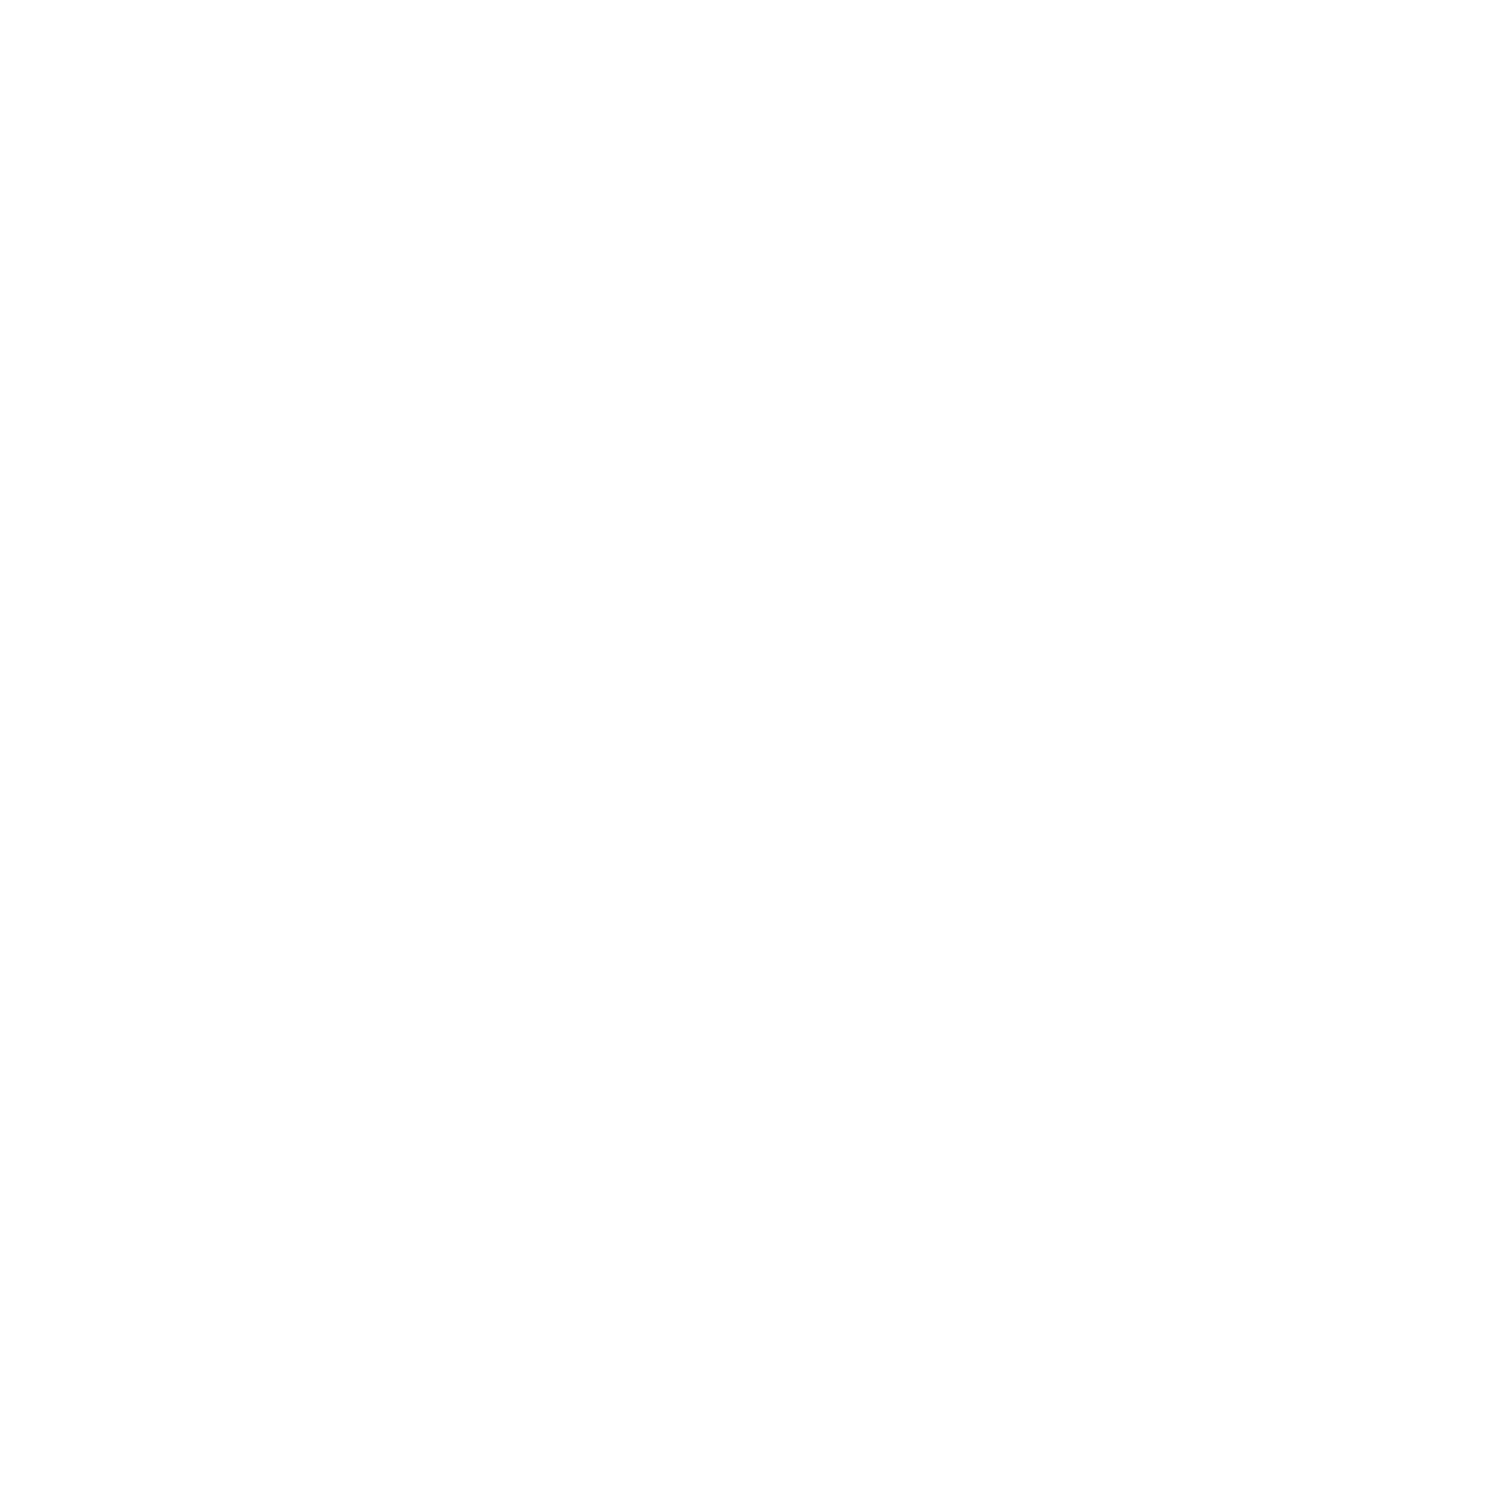 Highland Mortgage